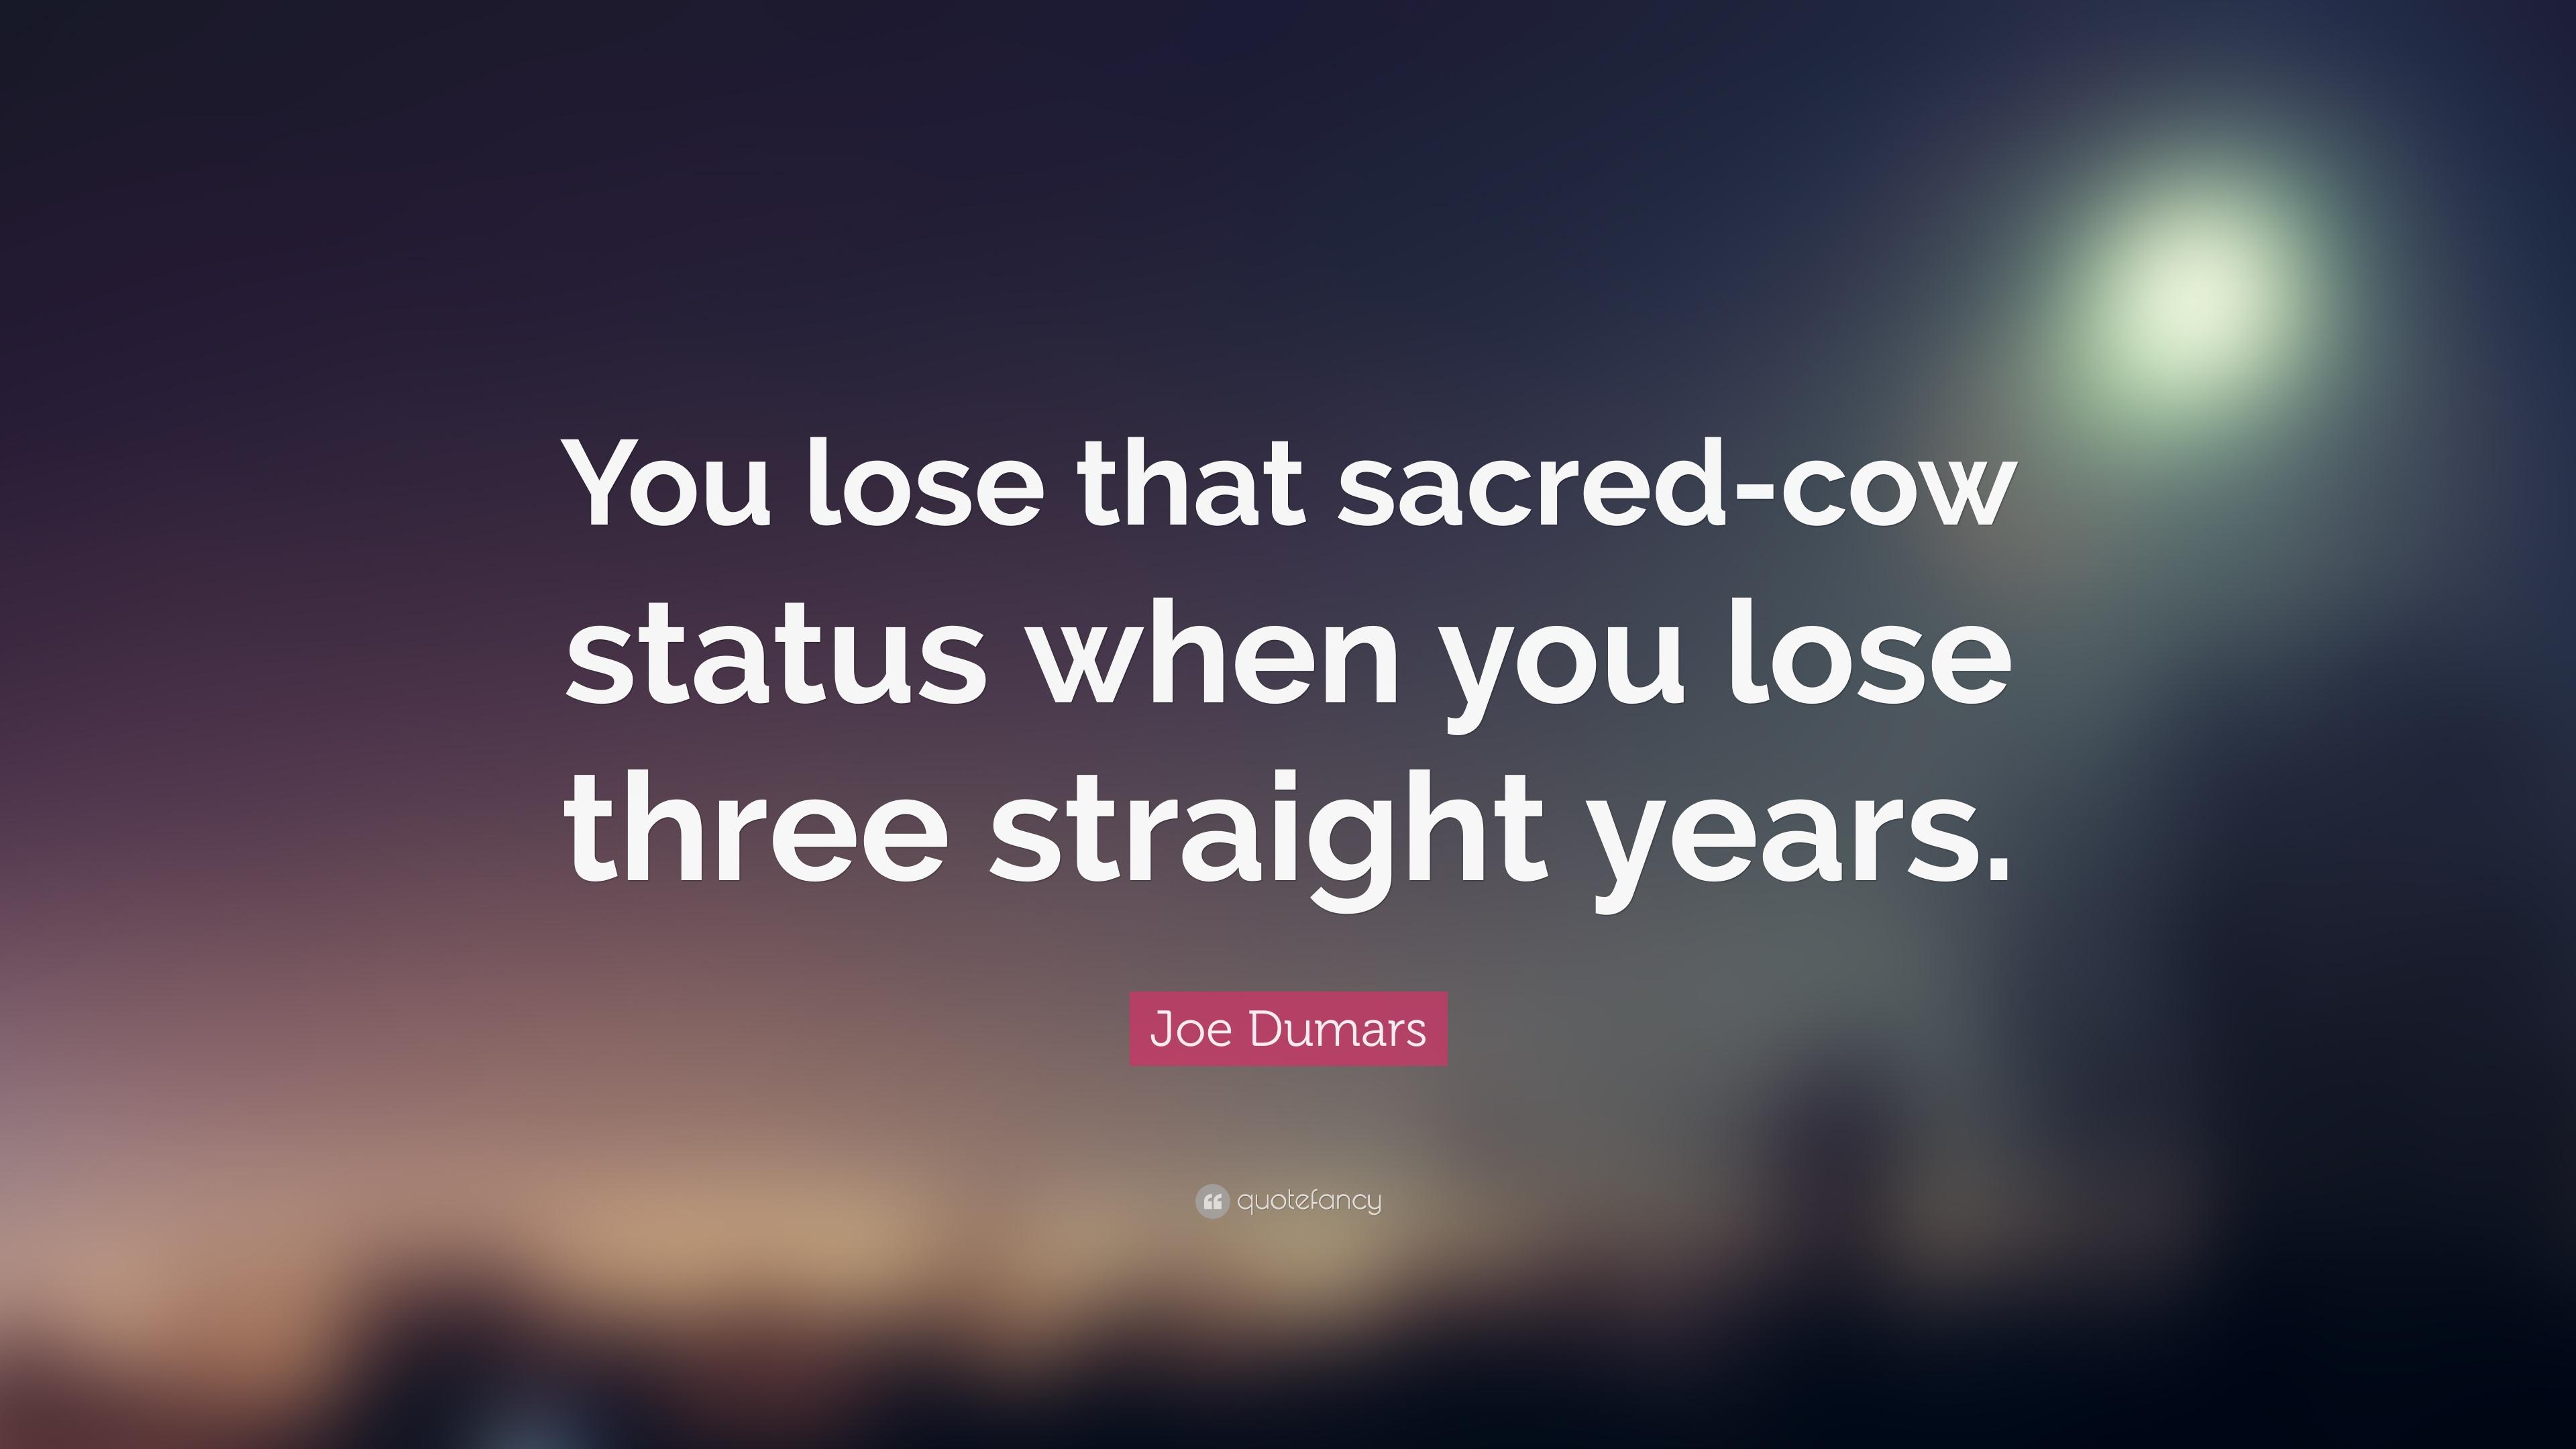 Joe Dumars Quote: “You lose that sacred